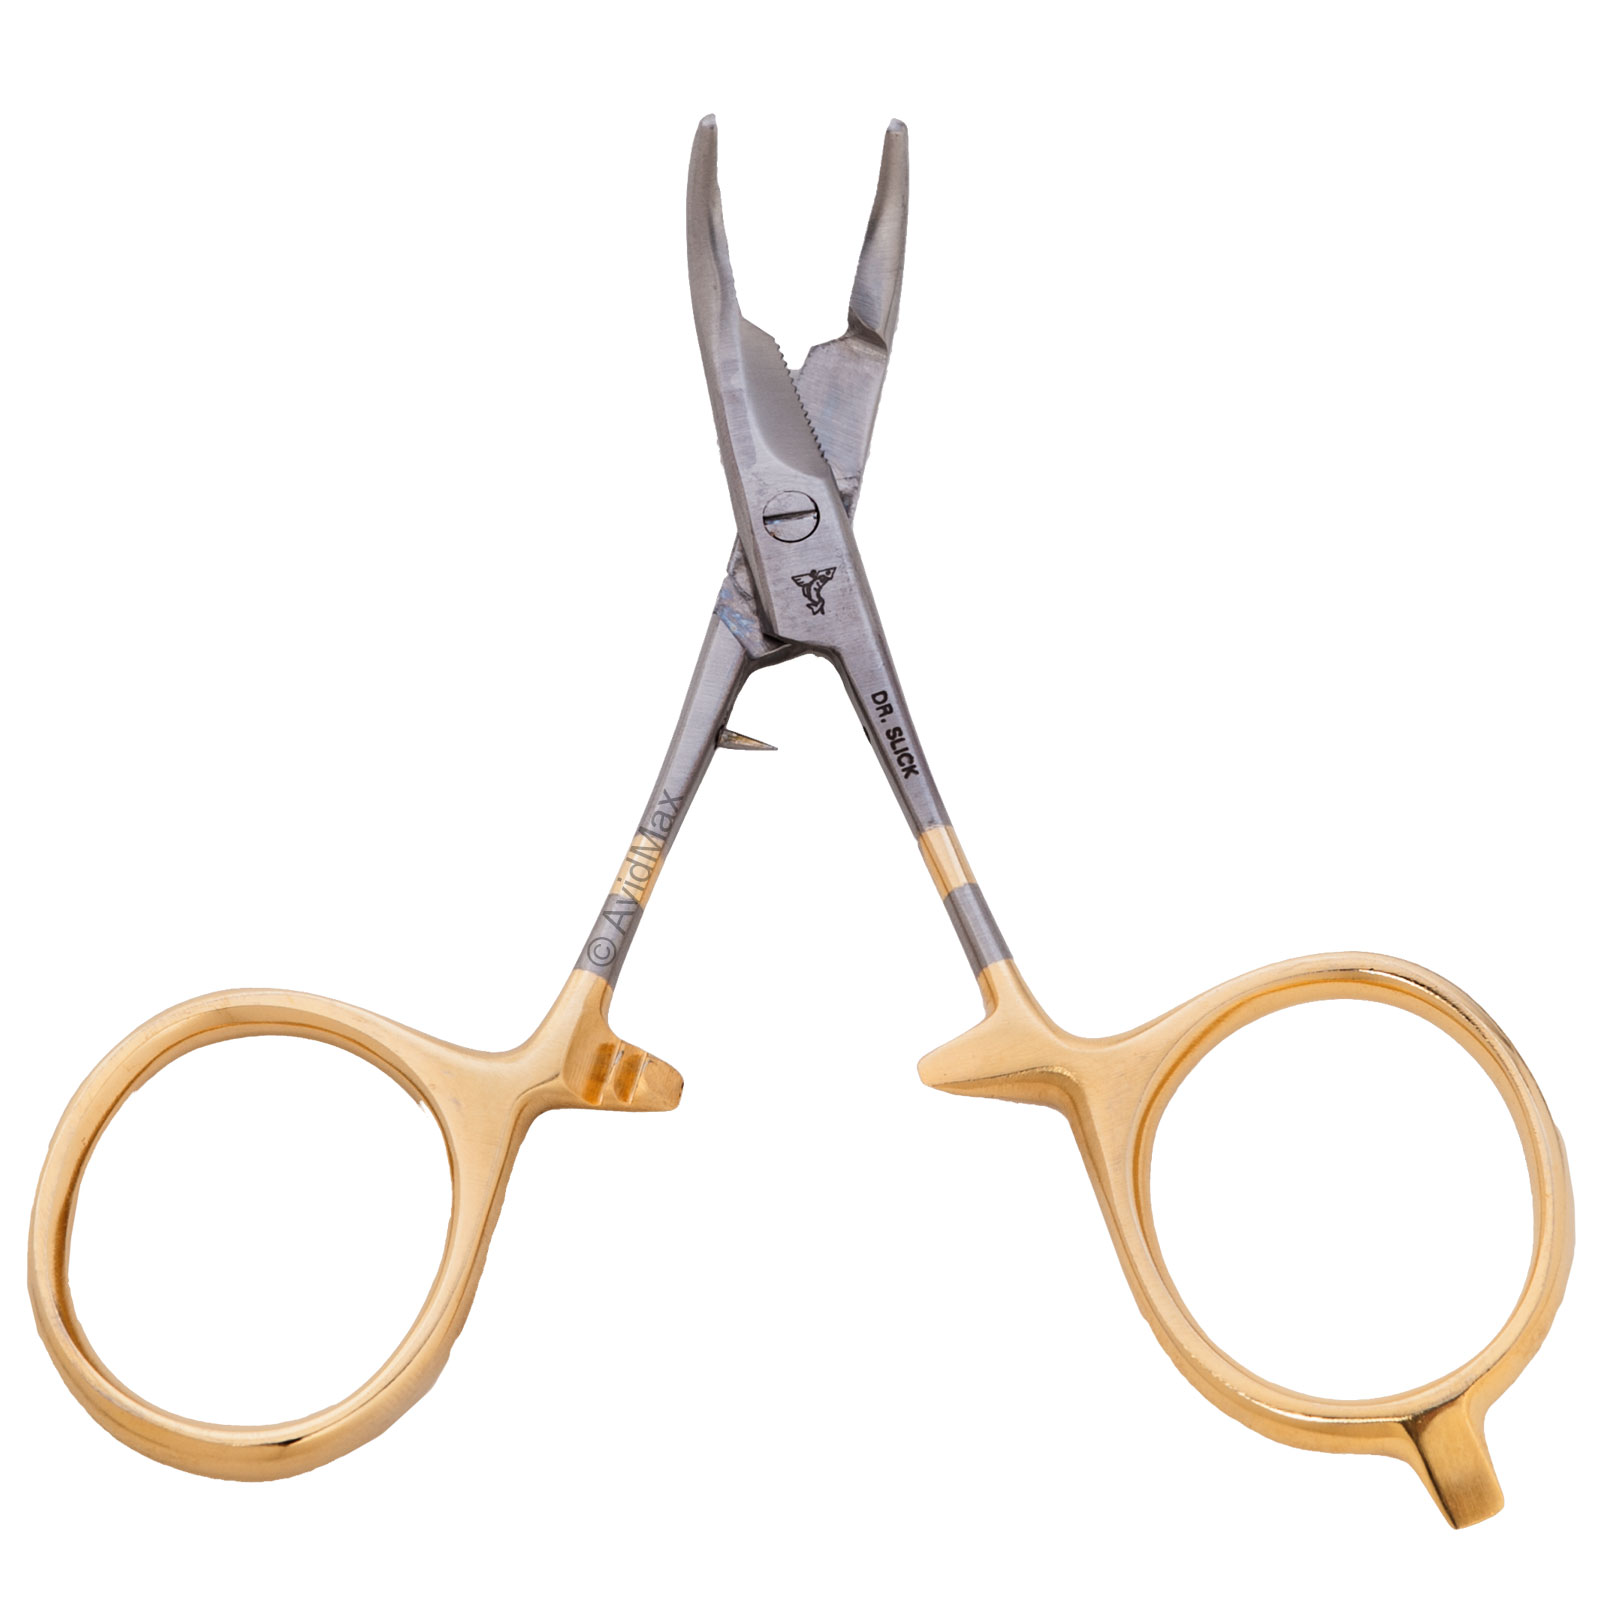 Dr. Slick 4 Micro Tip All Purpose Scissors - AvidMax